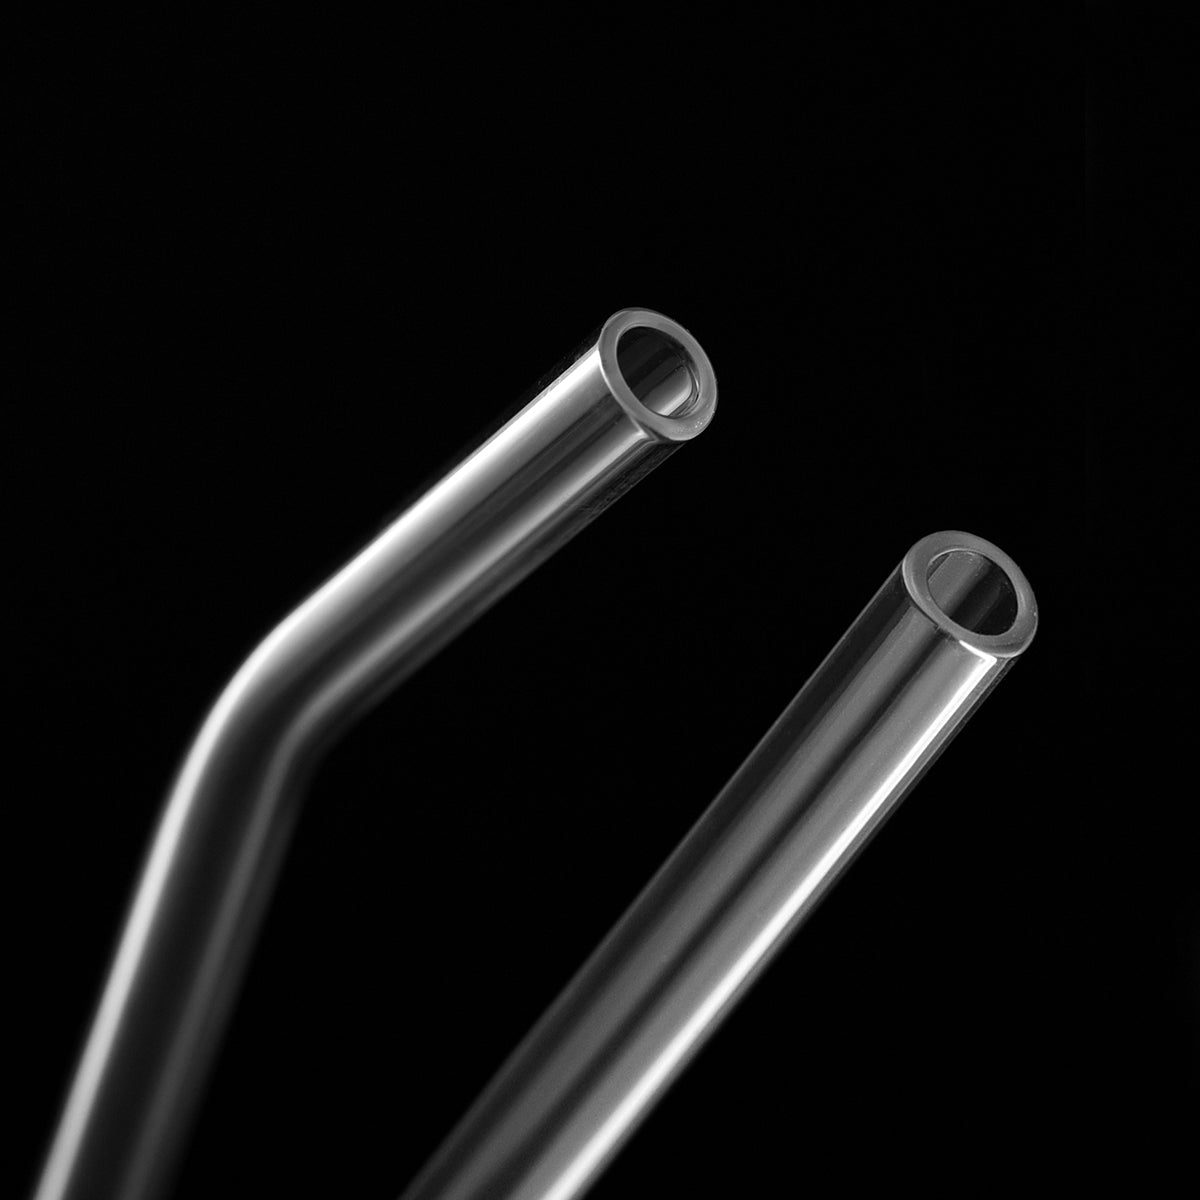 2 Bendy 2 Straight Reusable Glass Straws 6mm (Transparent )—STRAWTOPIA